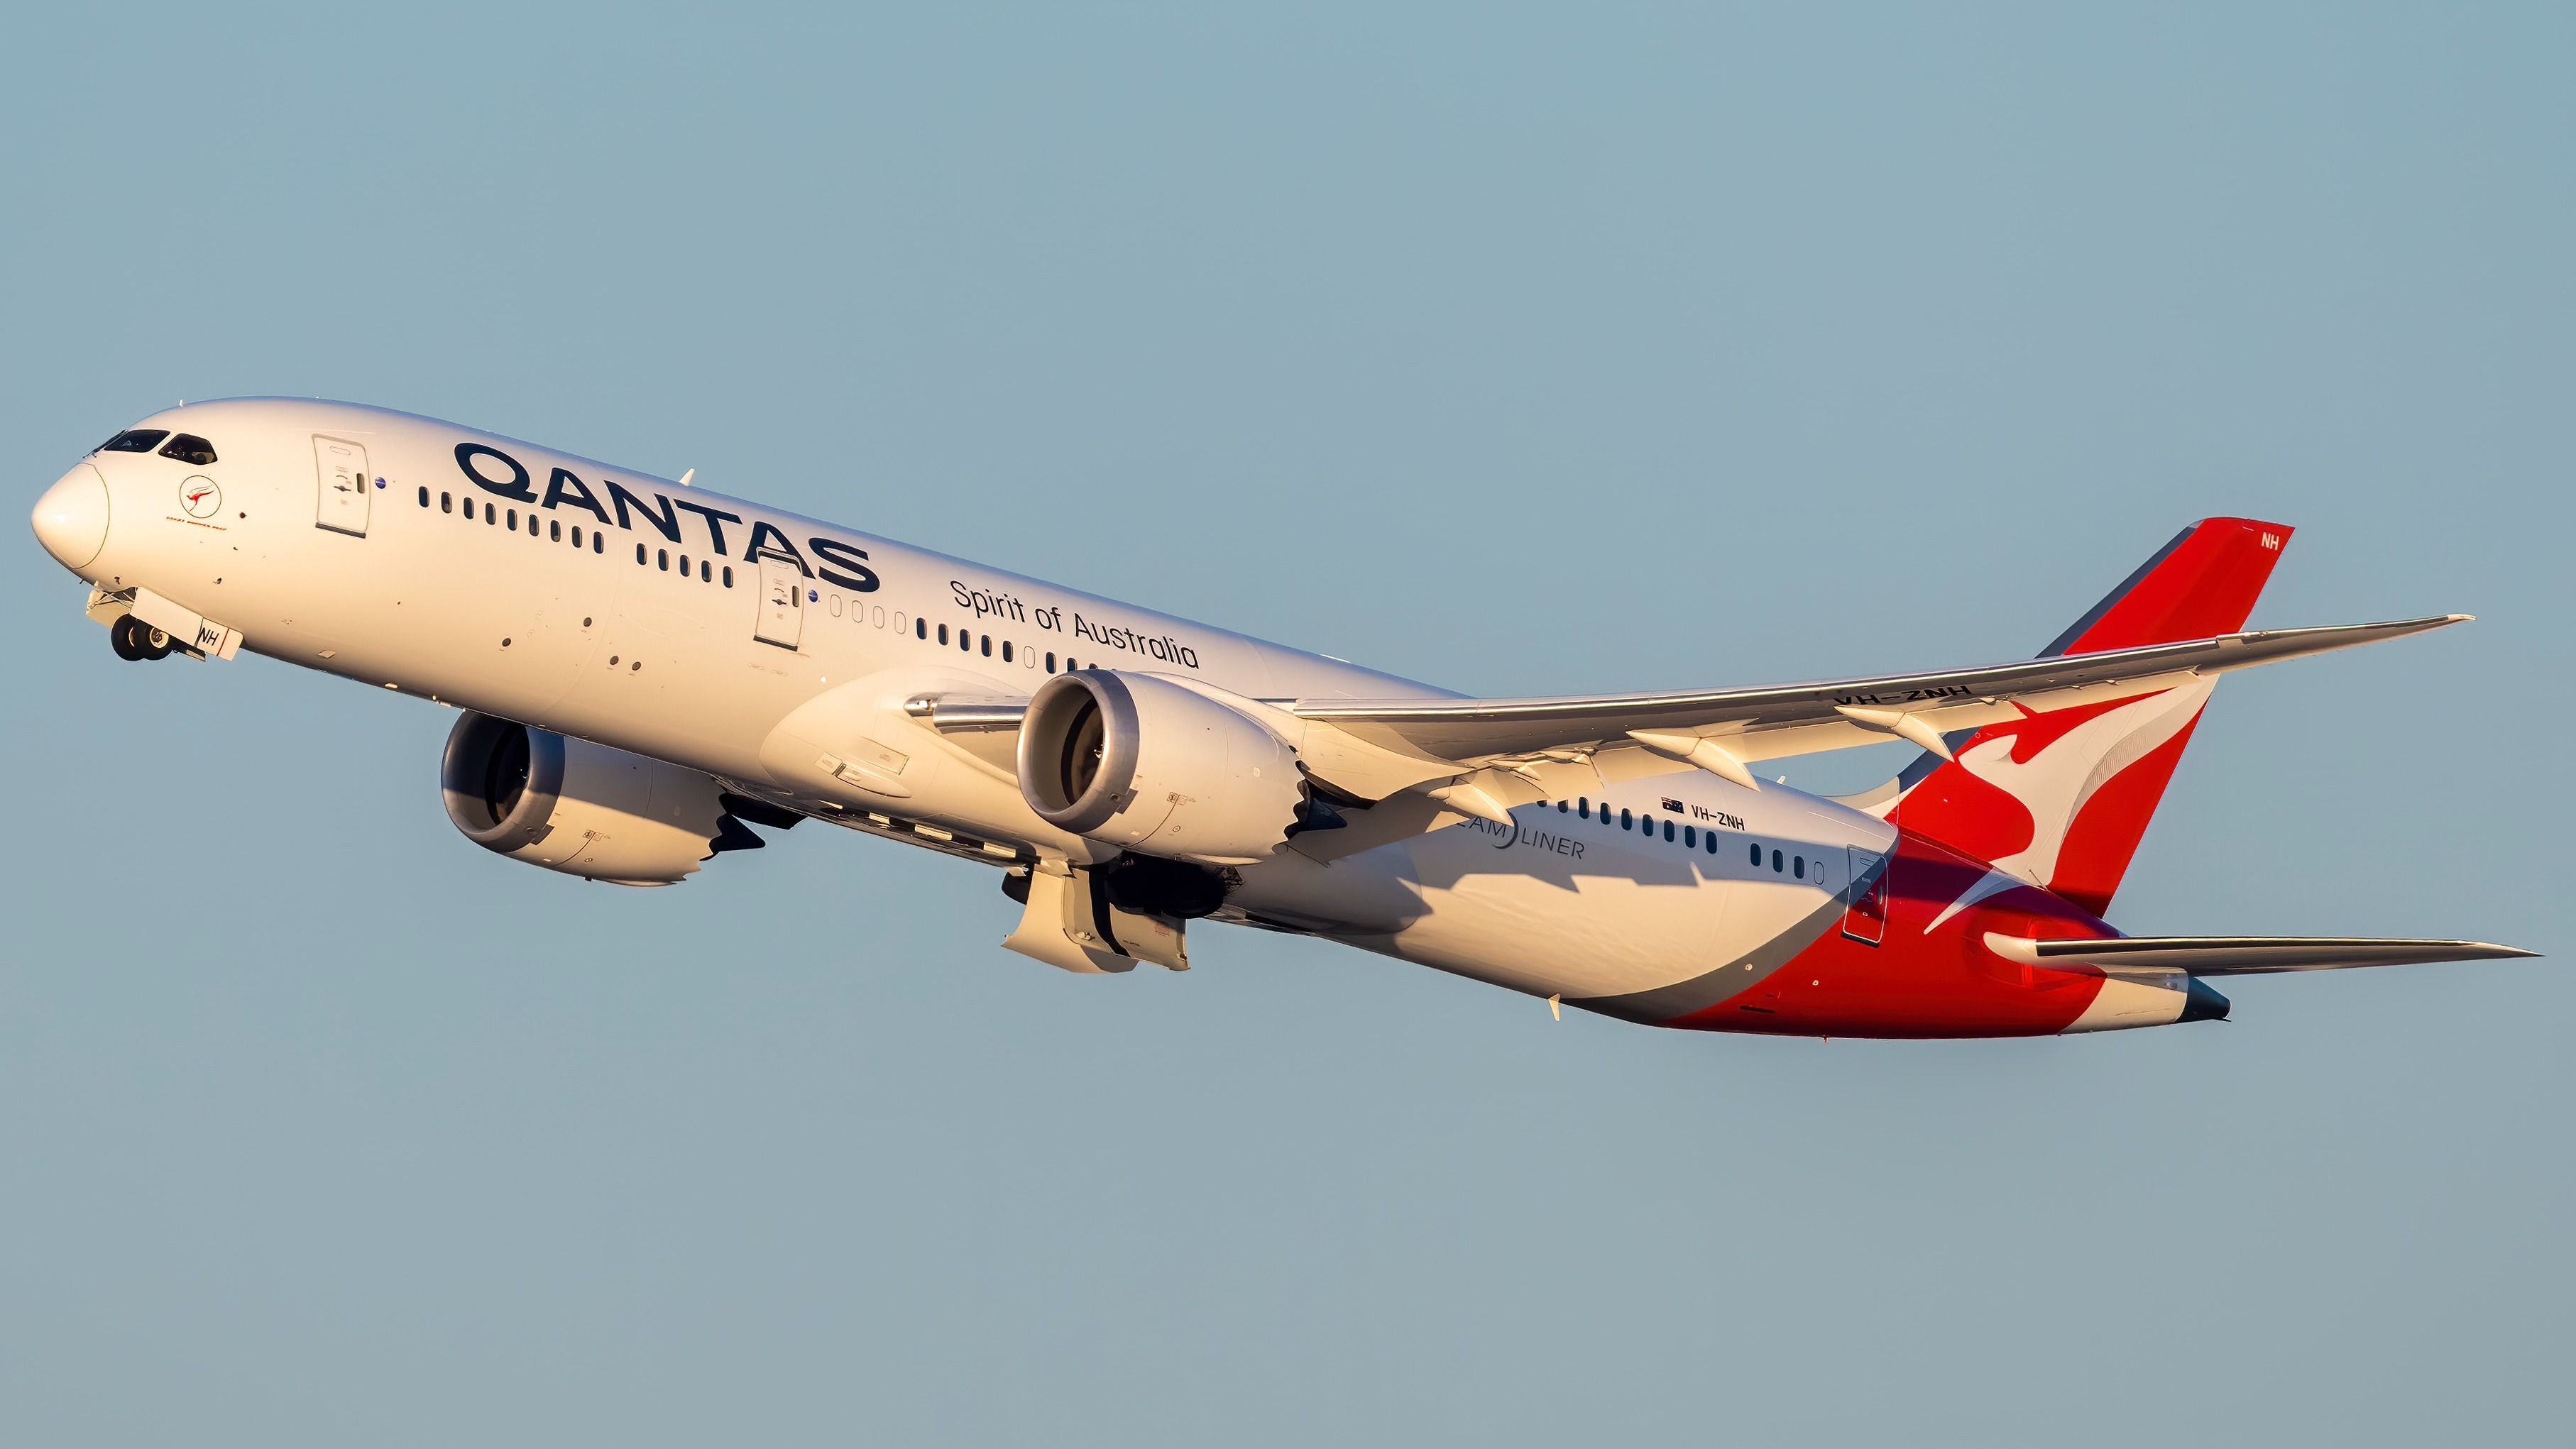 VH-ZNH Qantas Boeing 787-9 Dreamliner taking off